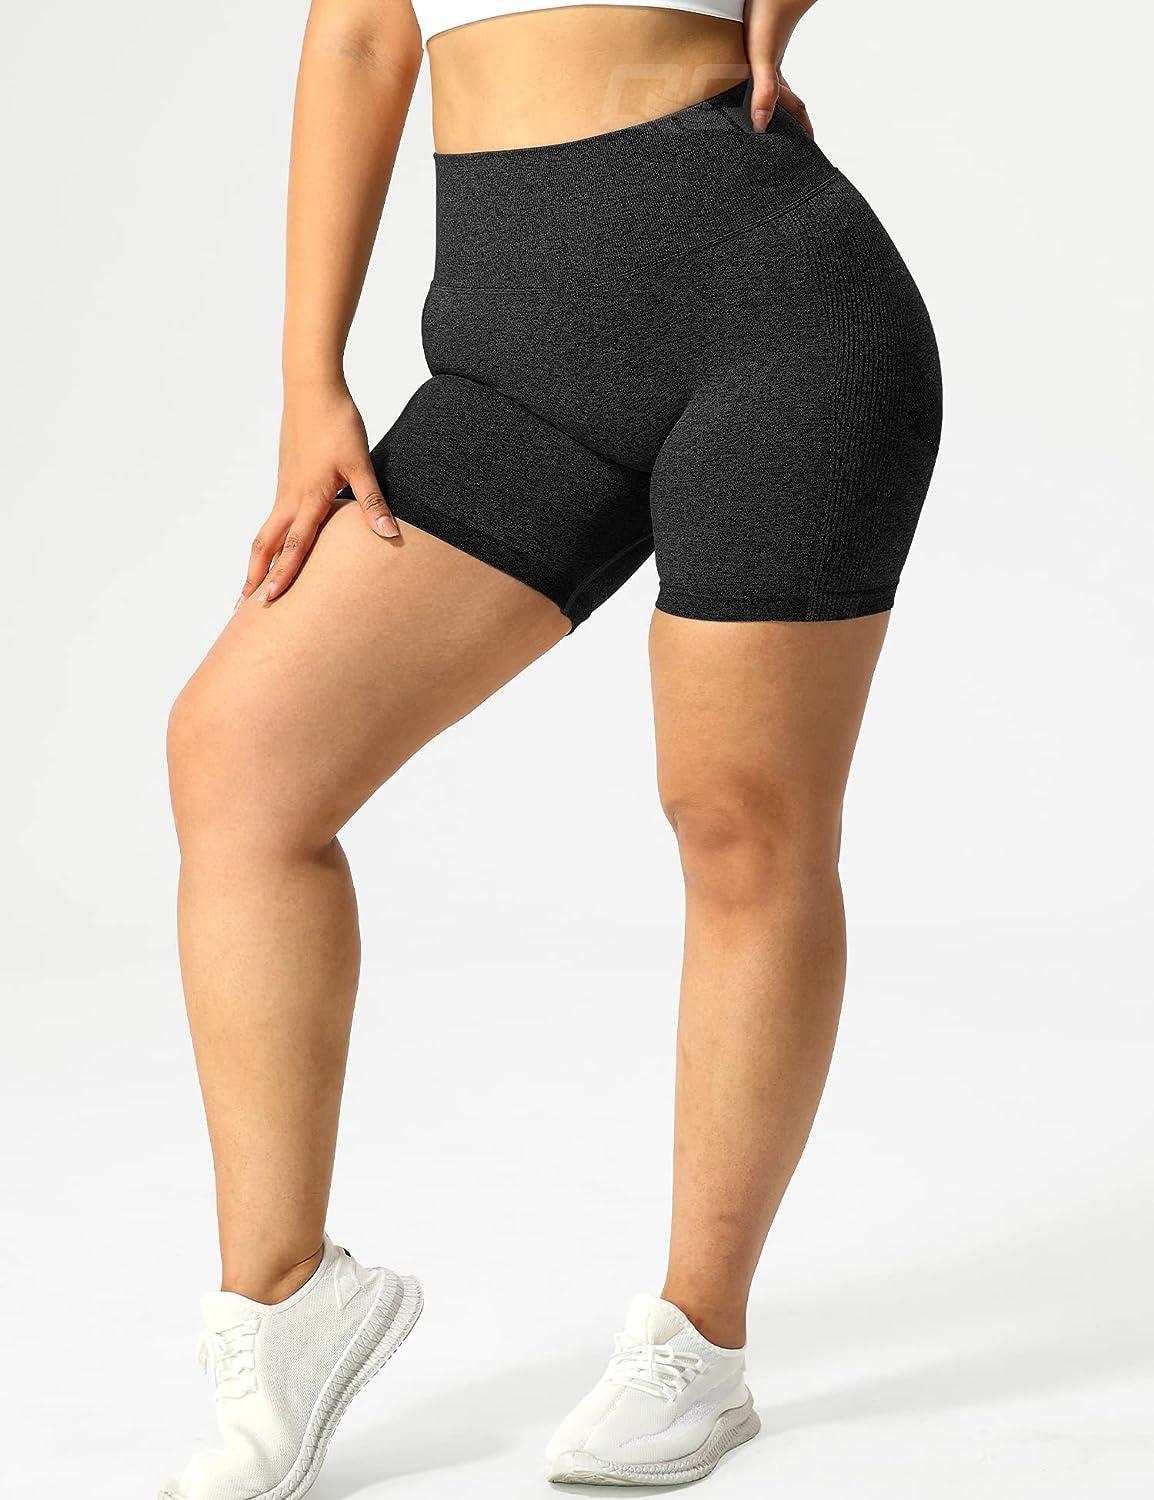 QOQ Womens Workout Biker Shorts Seamless High Waisted Tummy Control Slimming  Athletic Gym Yoga Pants #1 Scrunch Black XX-Large